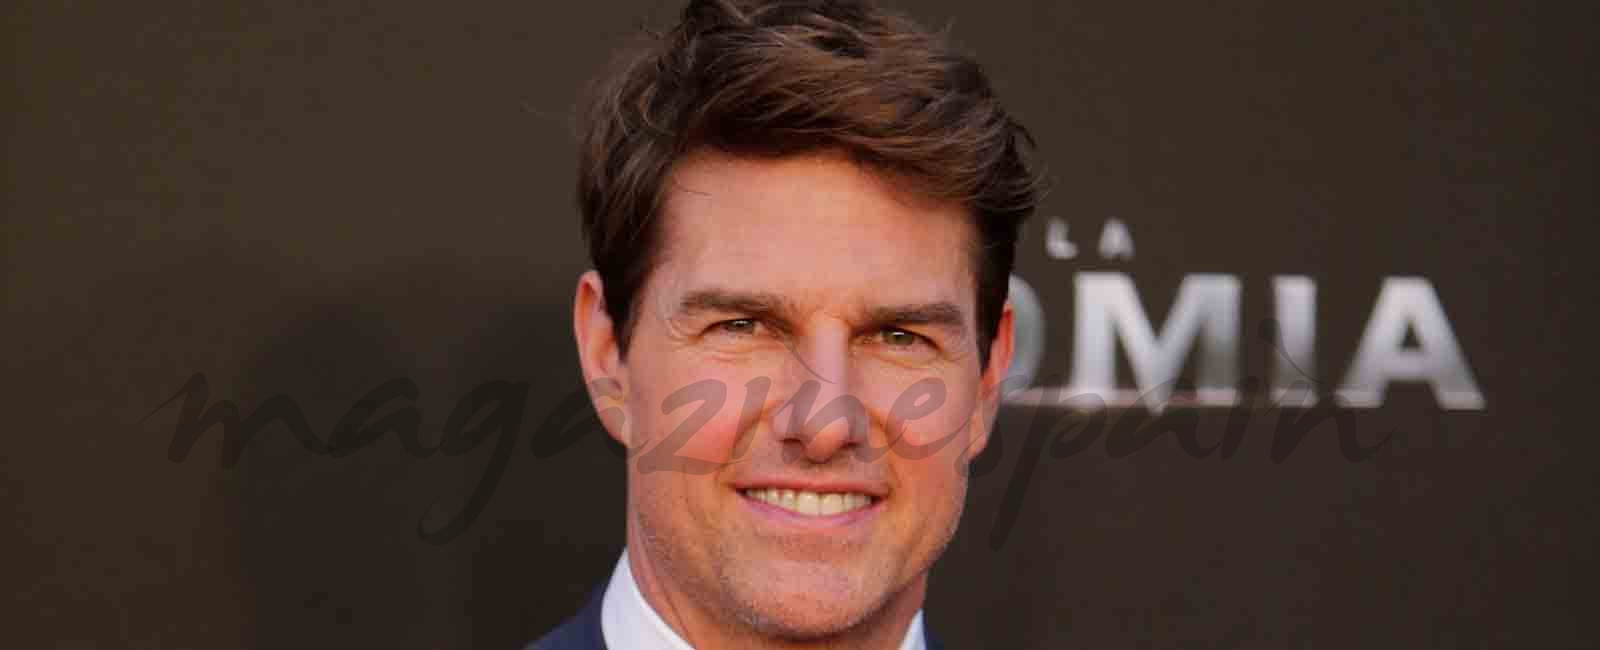 Tom Cruise presenta “La Momia” en Madrid